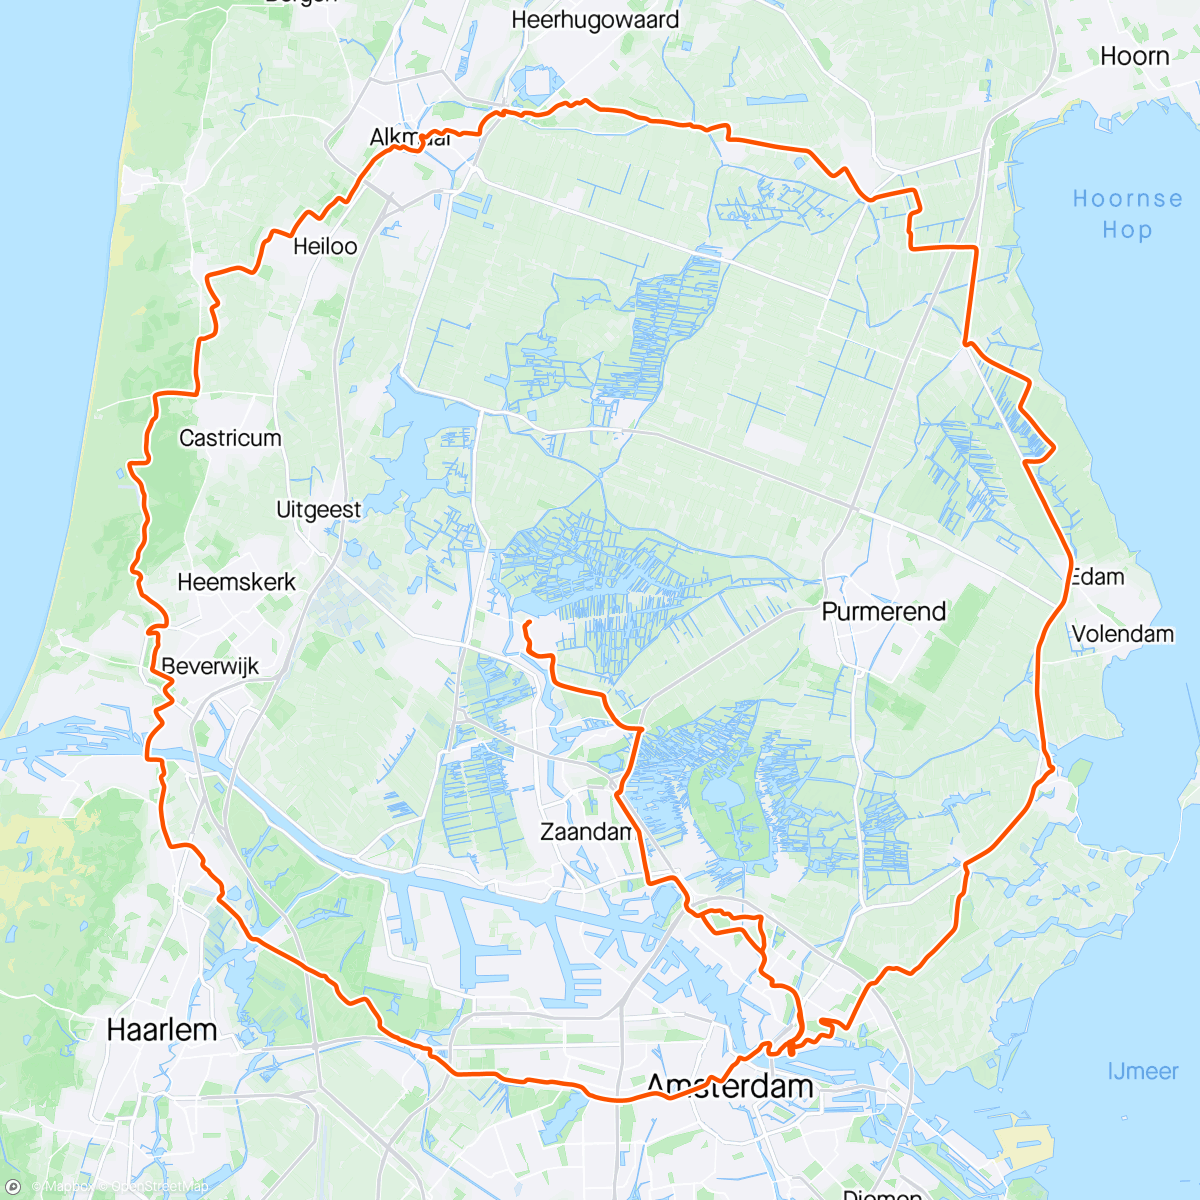 「Zondag Ochtendrit, @Mr.ride-A-round.cc
#deechterondevanAmsterdam 
#rondjefietsen」活動的地圖